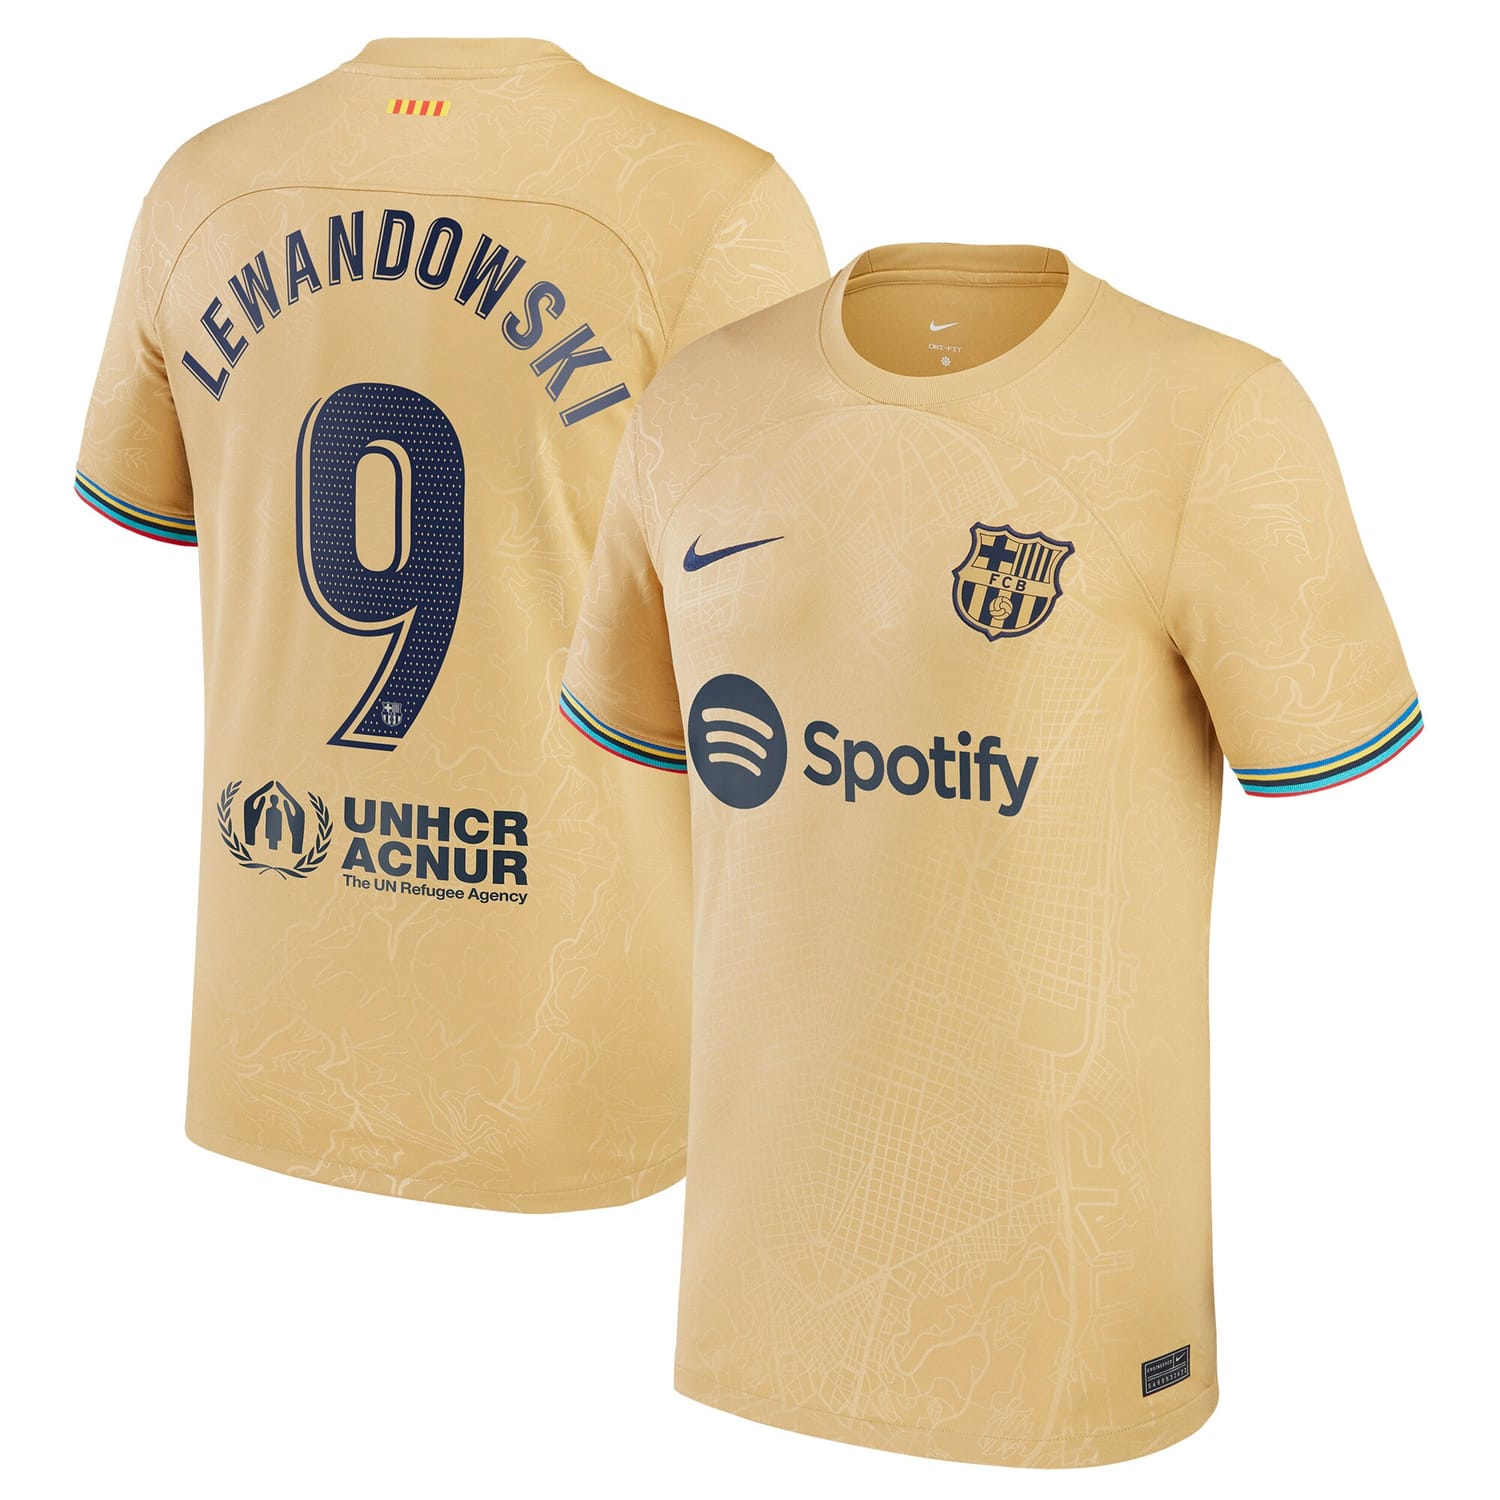 La Liga Barcelona Away Jersey Shirt Gold 2022-23 player Robert Lewandowski printing for Men